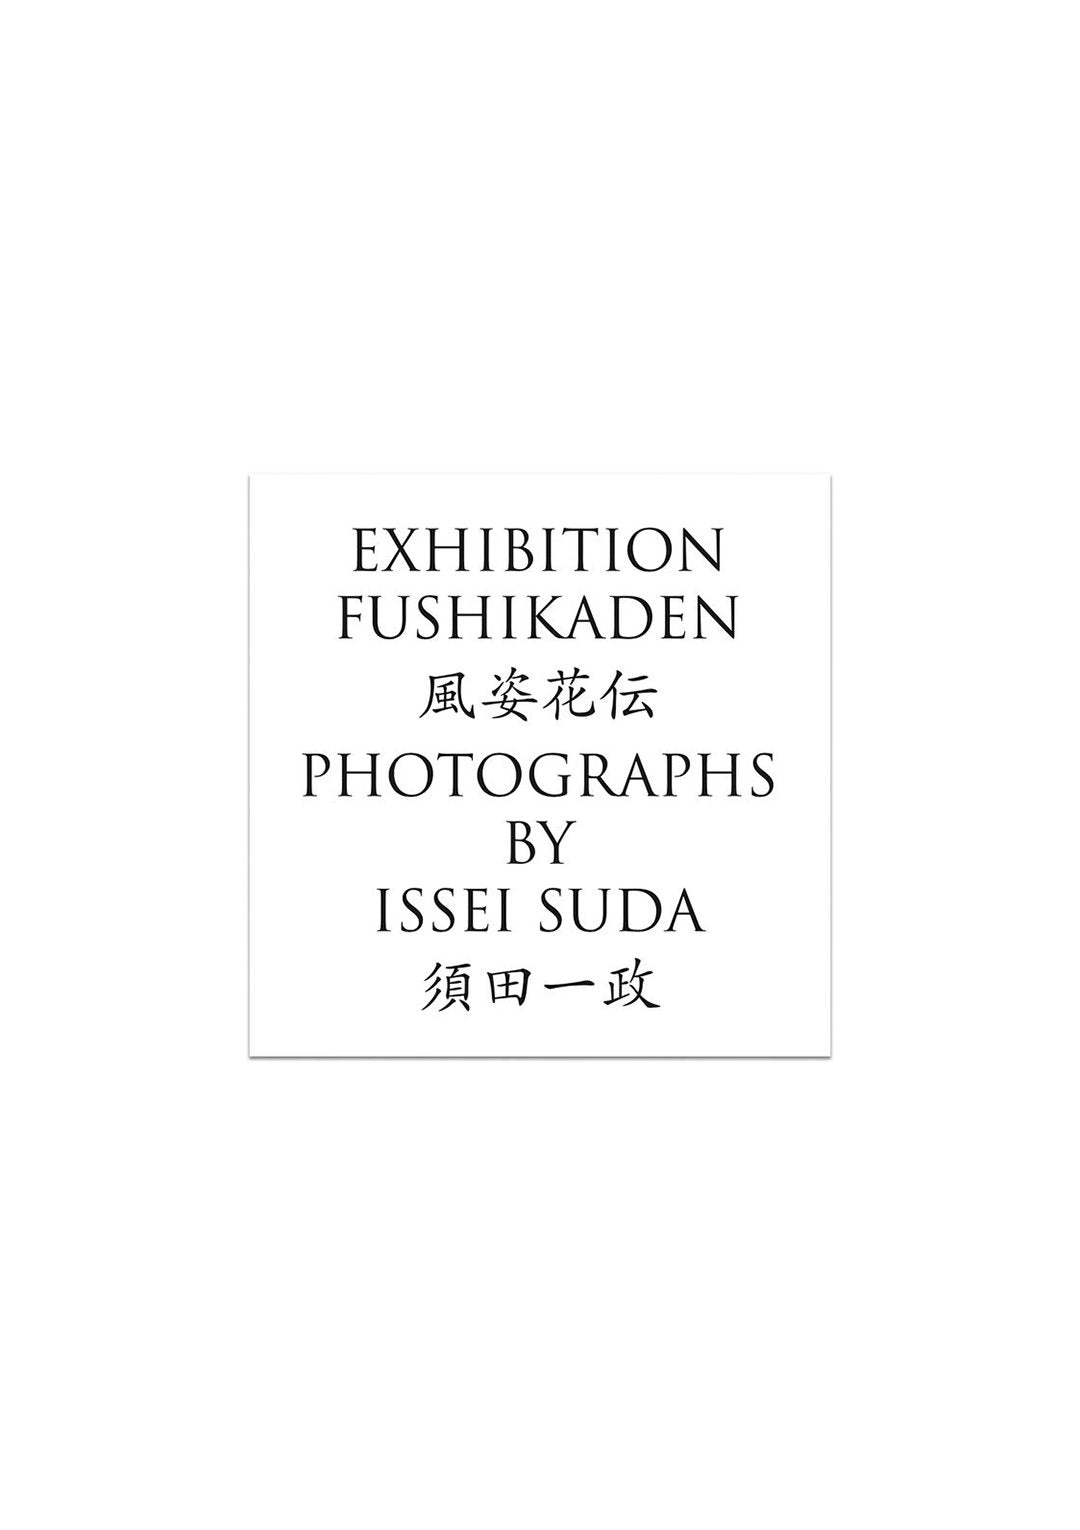 Exhibition FUSHIKADEN, Photographs by Issei SUDA